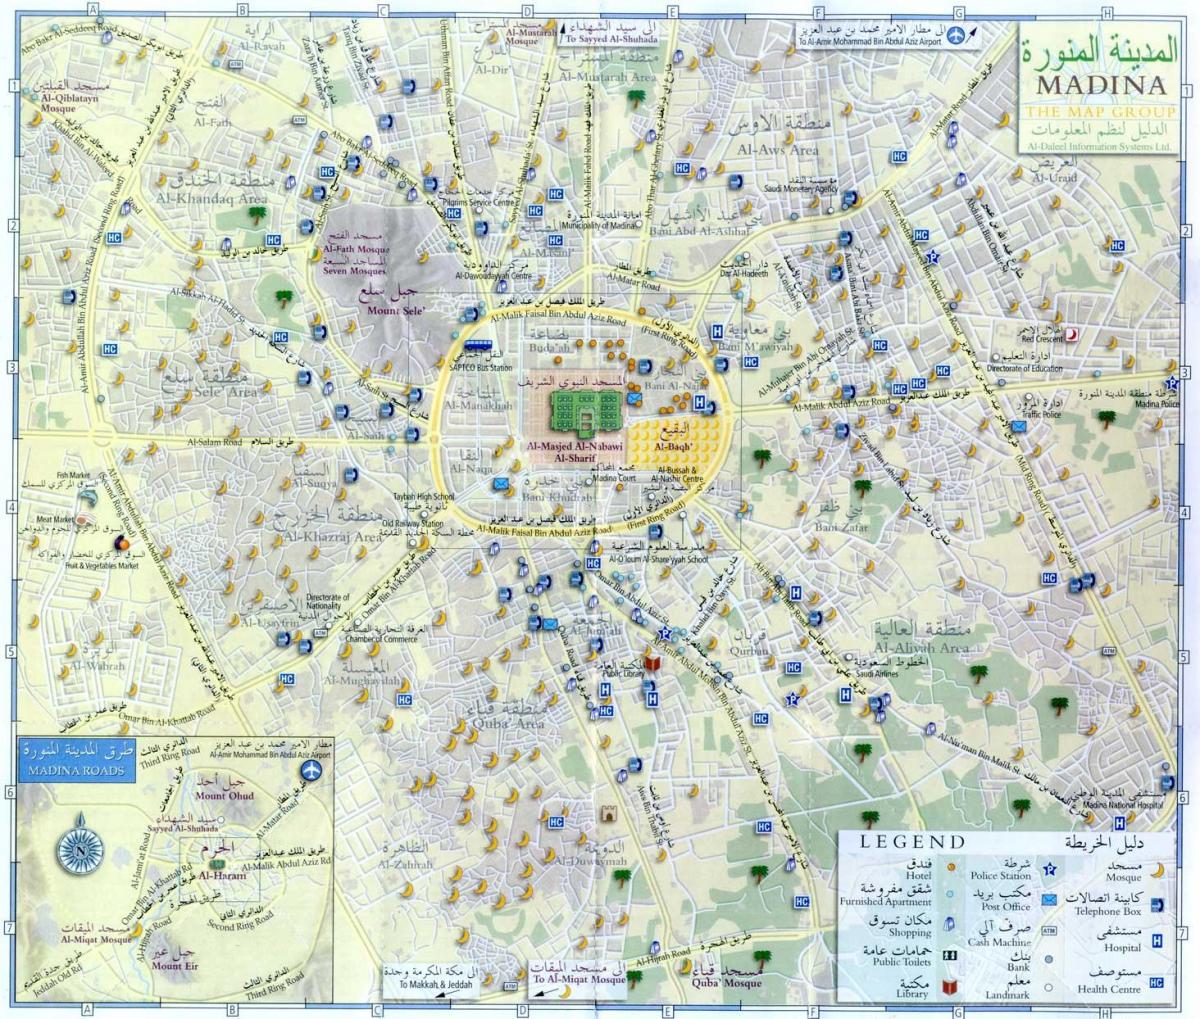 Mecca (Makkah) city center map